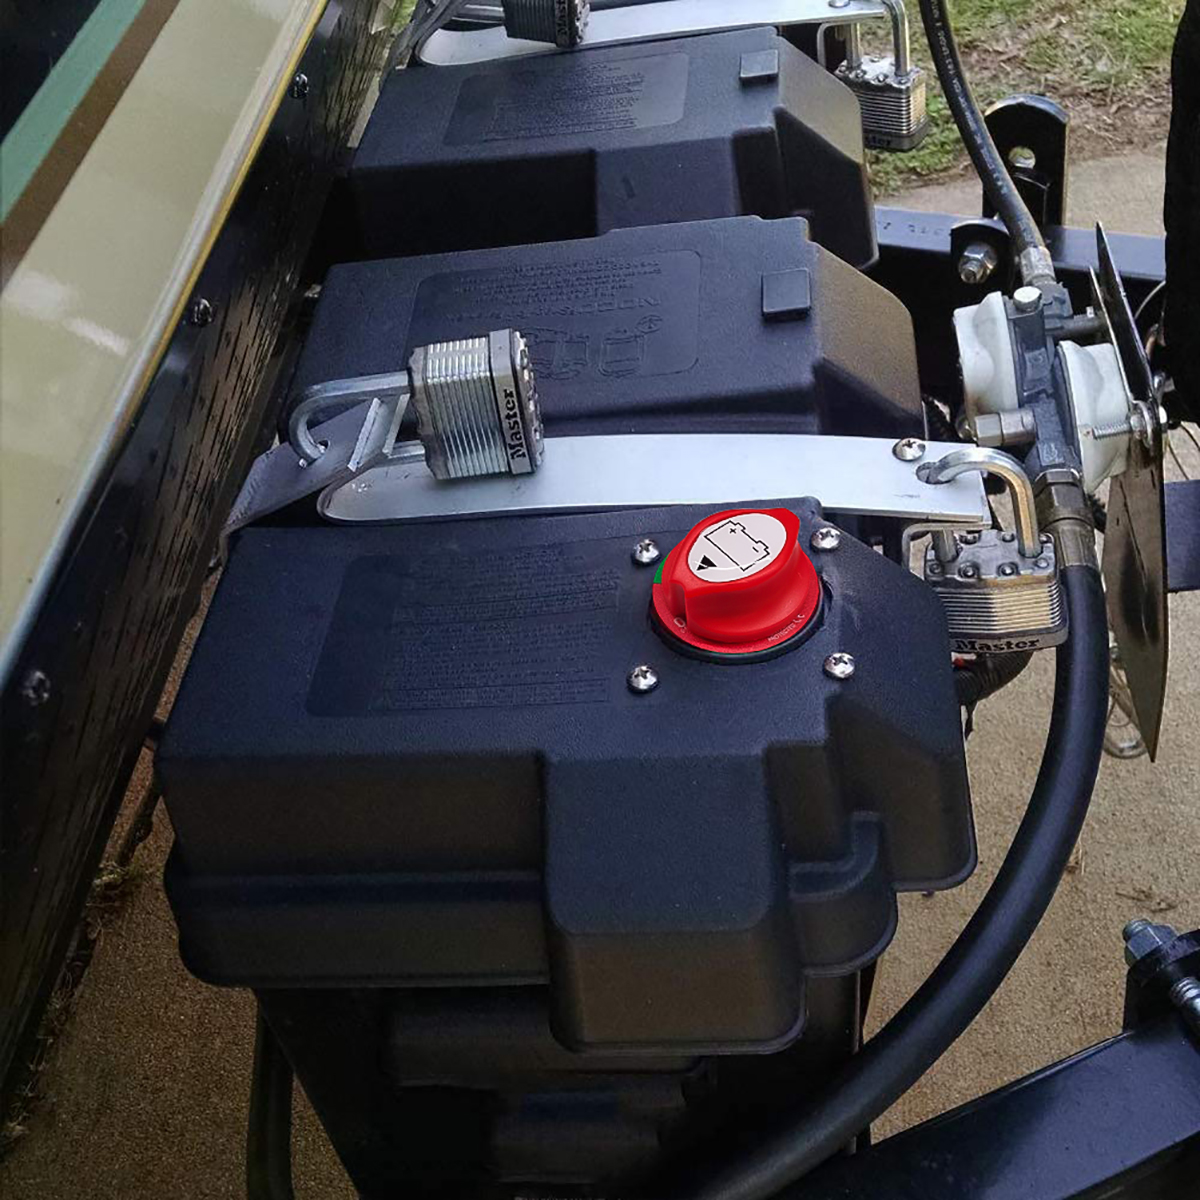 AUDEW Battery Cut off Switch 12V-48V for Boat Marine RV Car ATV Vehicles